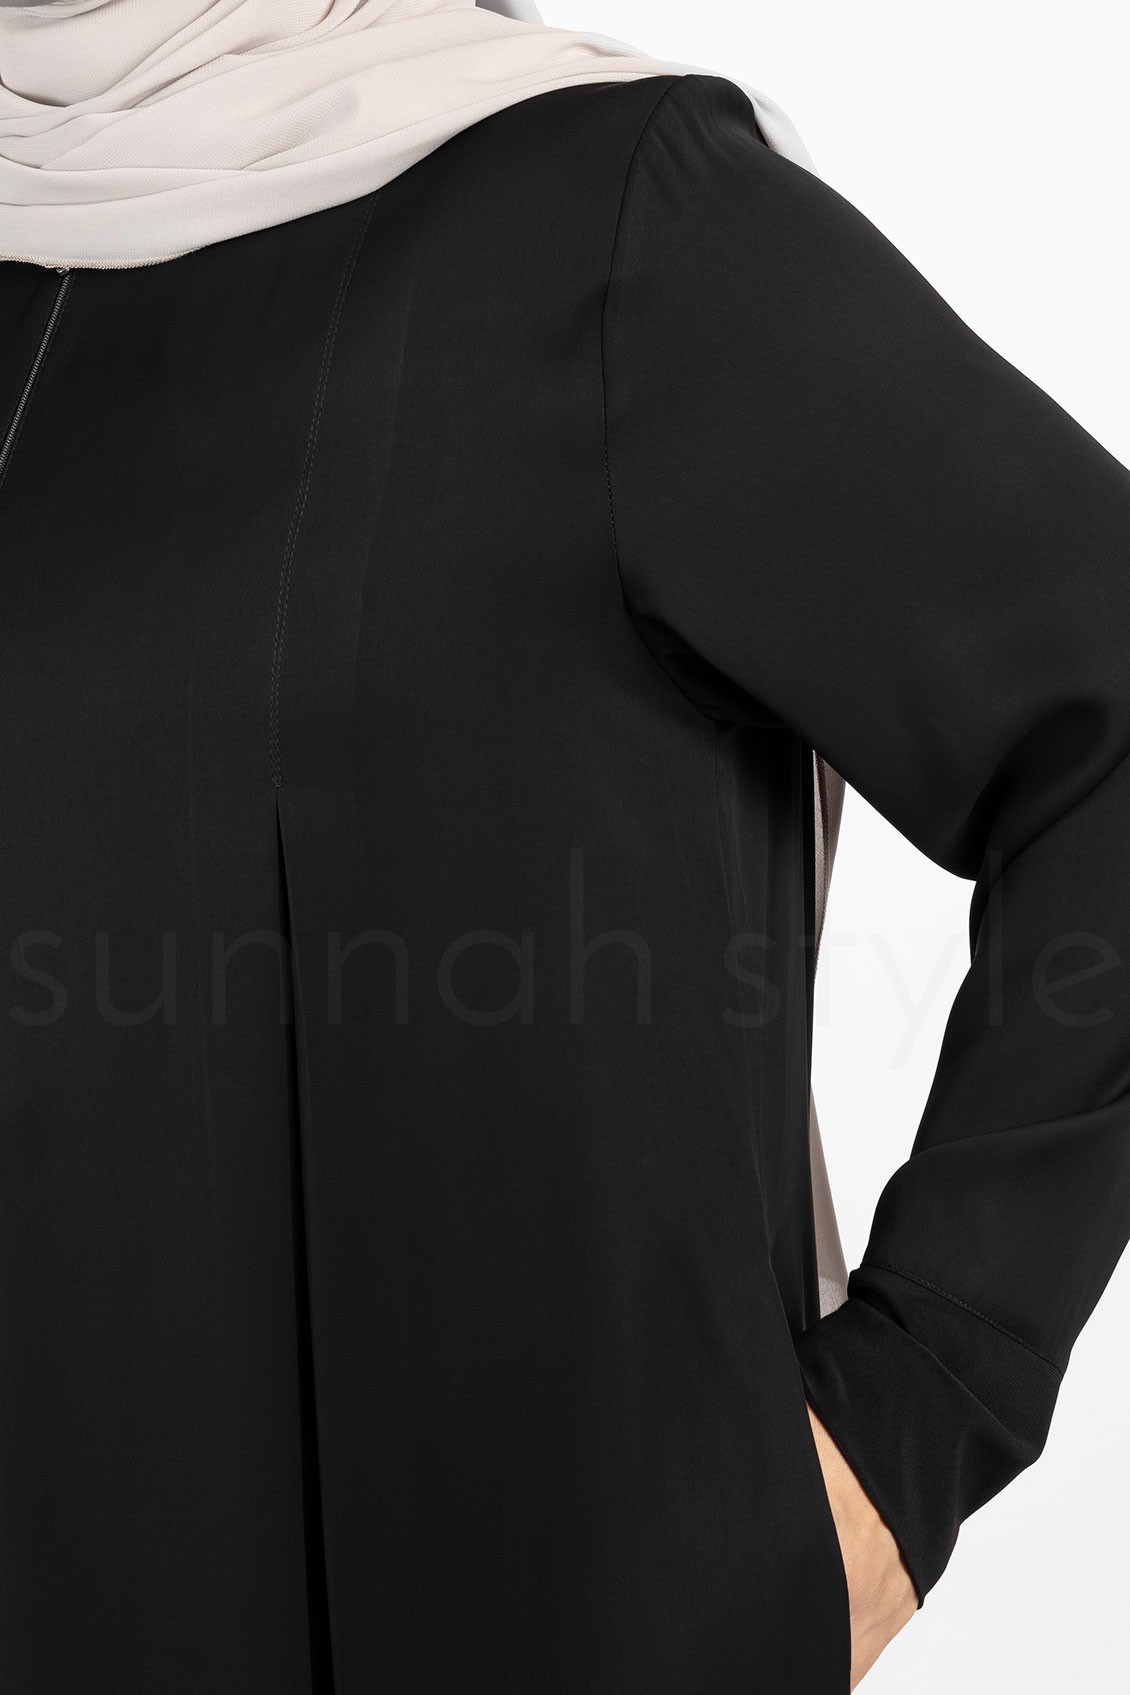 Sunnah Style Belle Umbrella Abaya Black